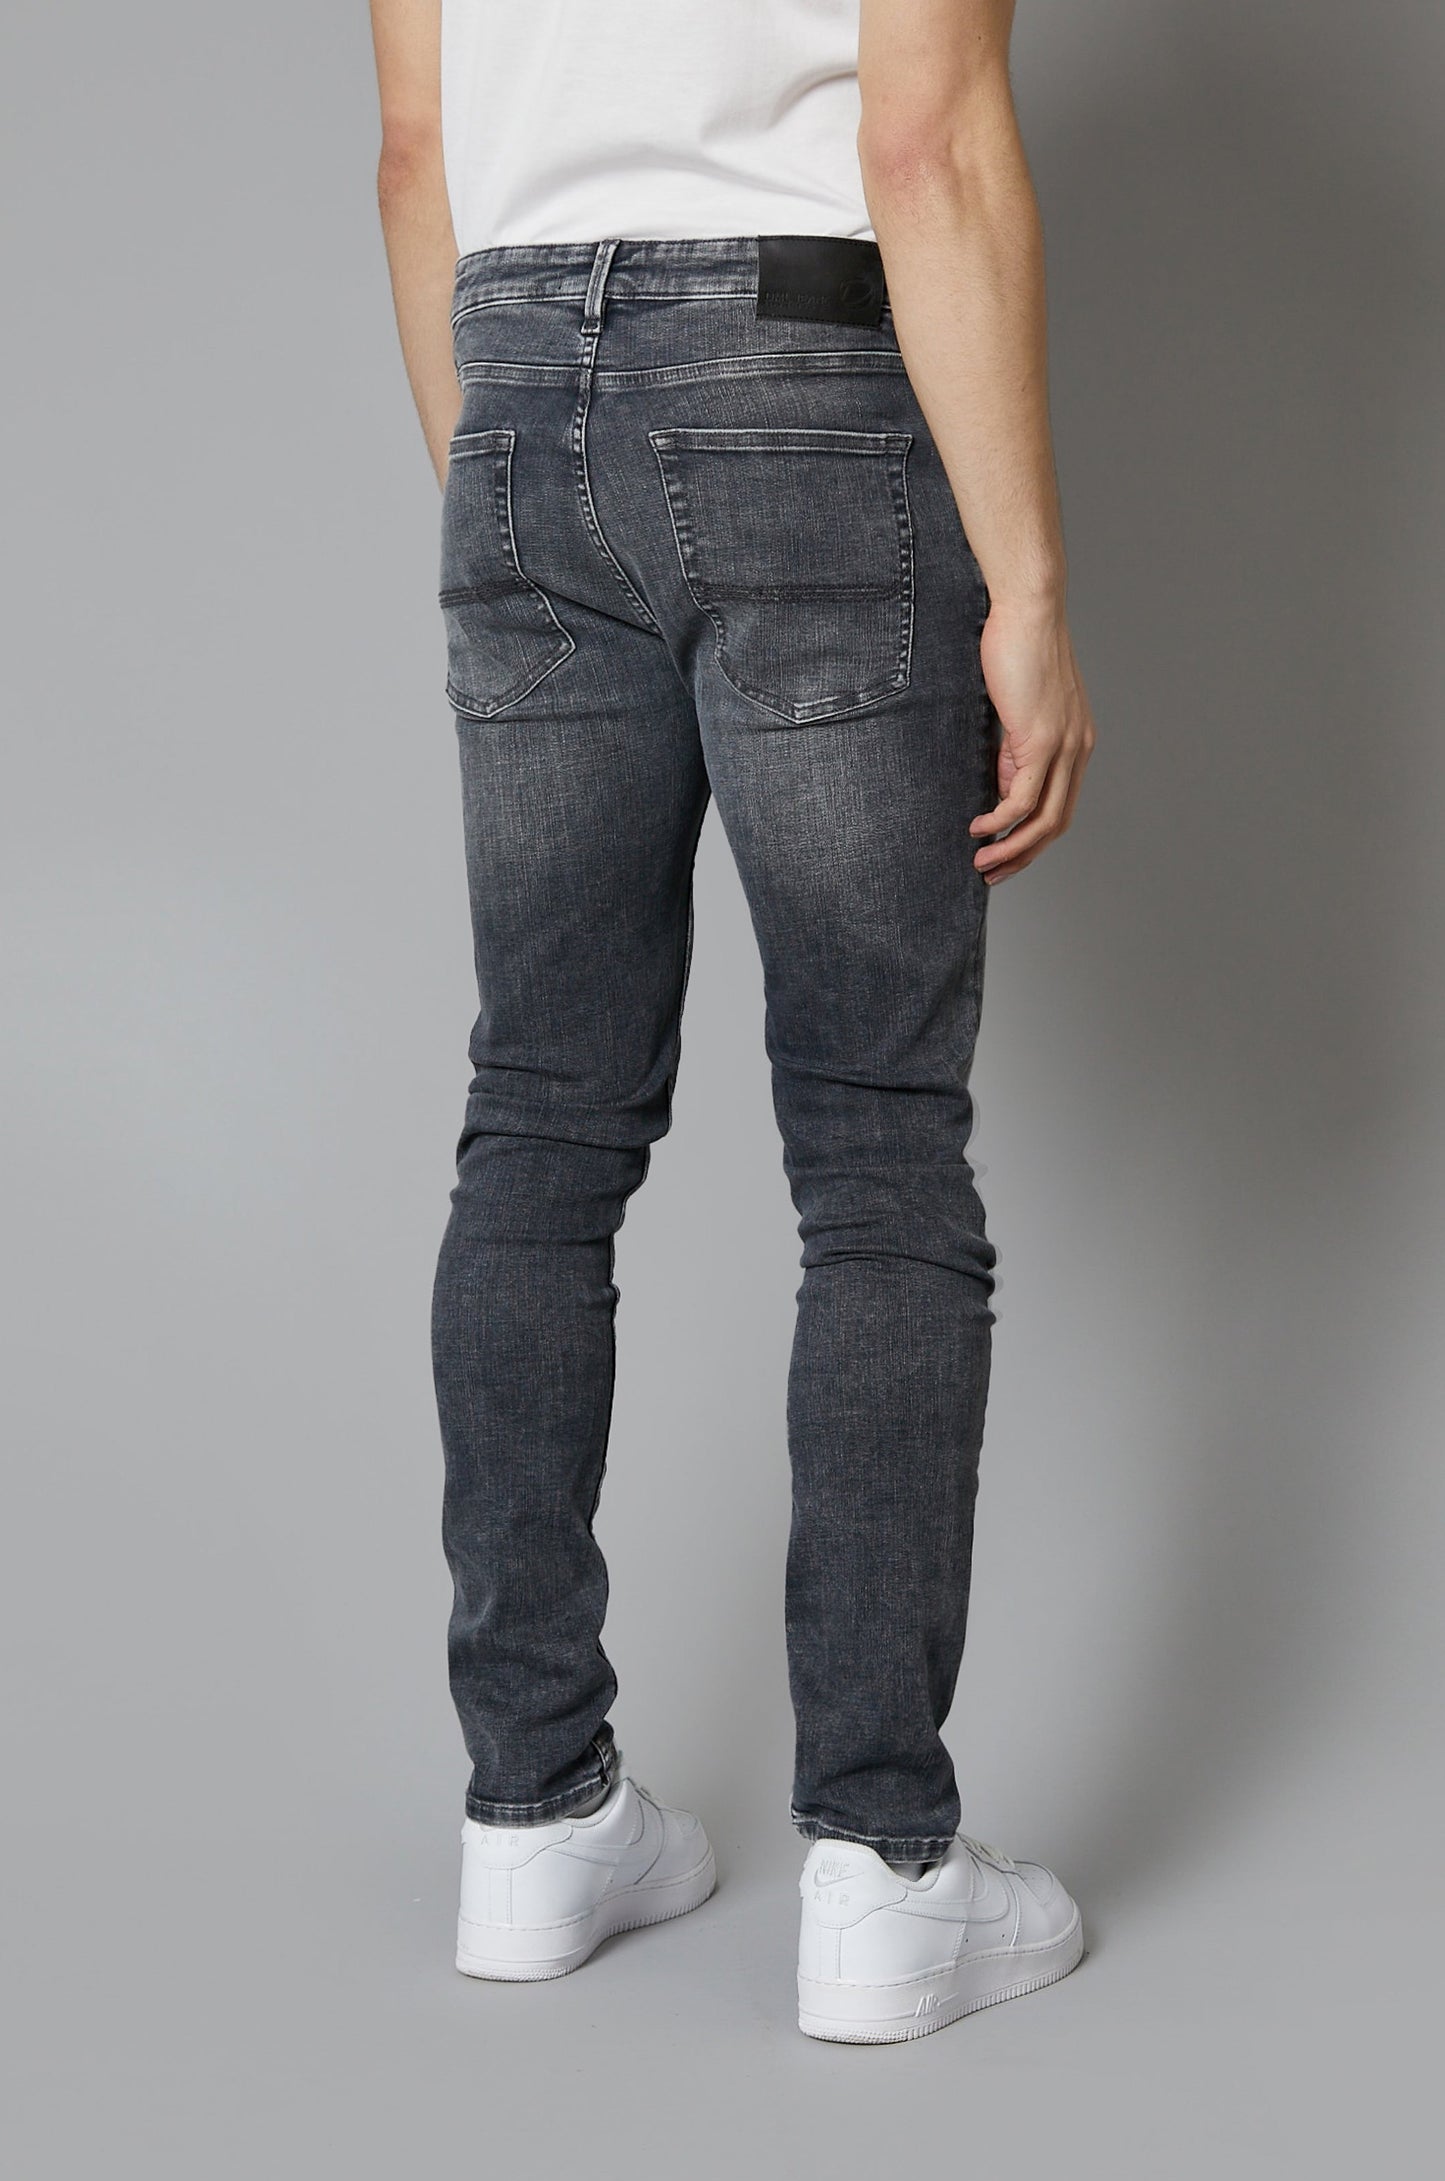 DML Jeans Nevada Skinny Fit Jeans In Grey